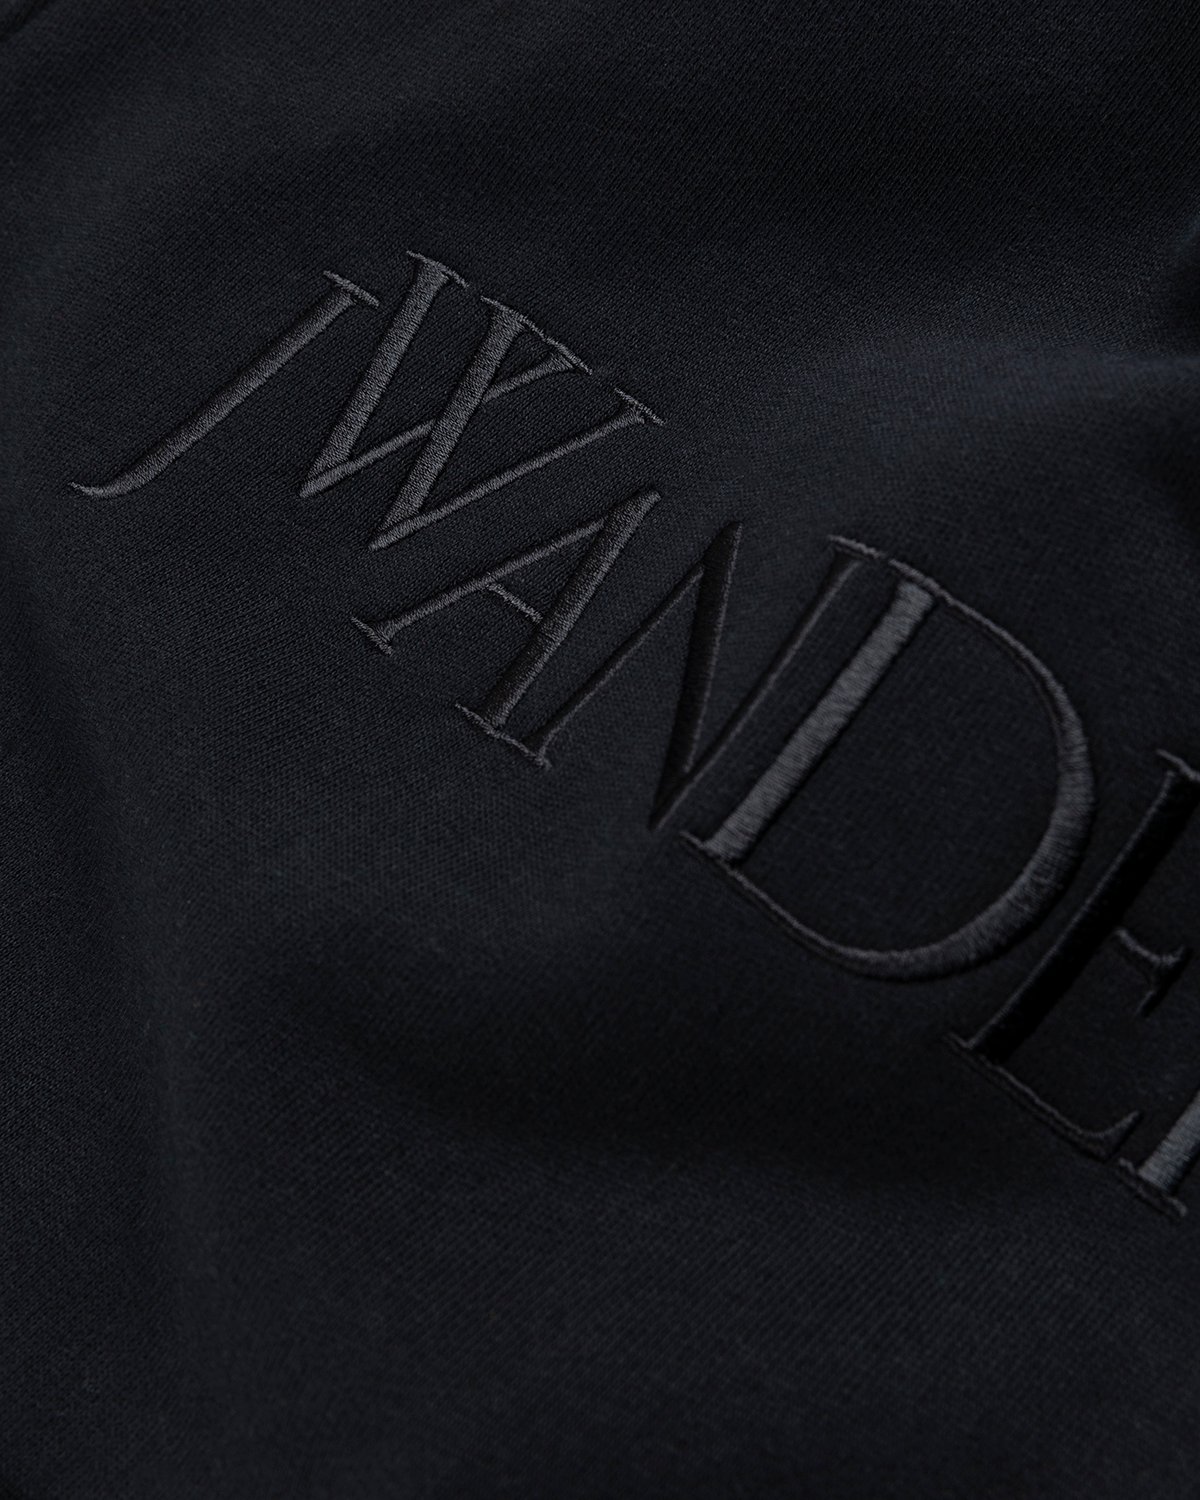 J.W. Anderson - Classic Logo Hoodie Black - Clothing - Black - Image 4